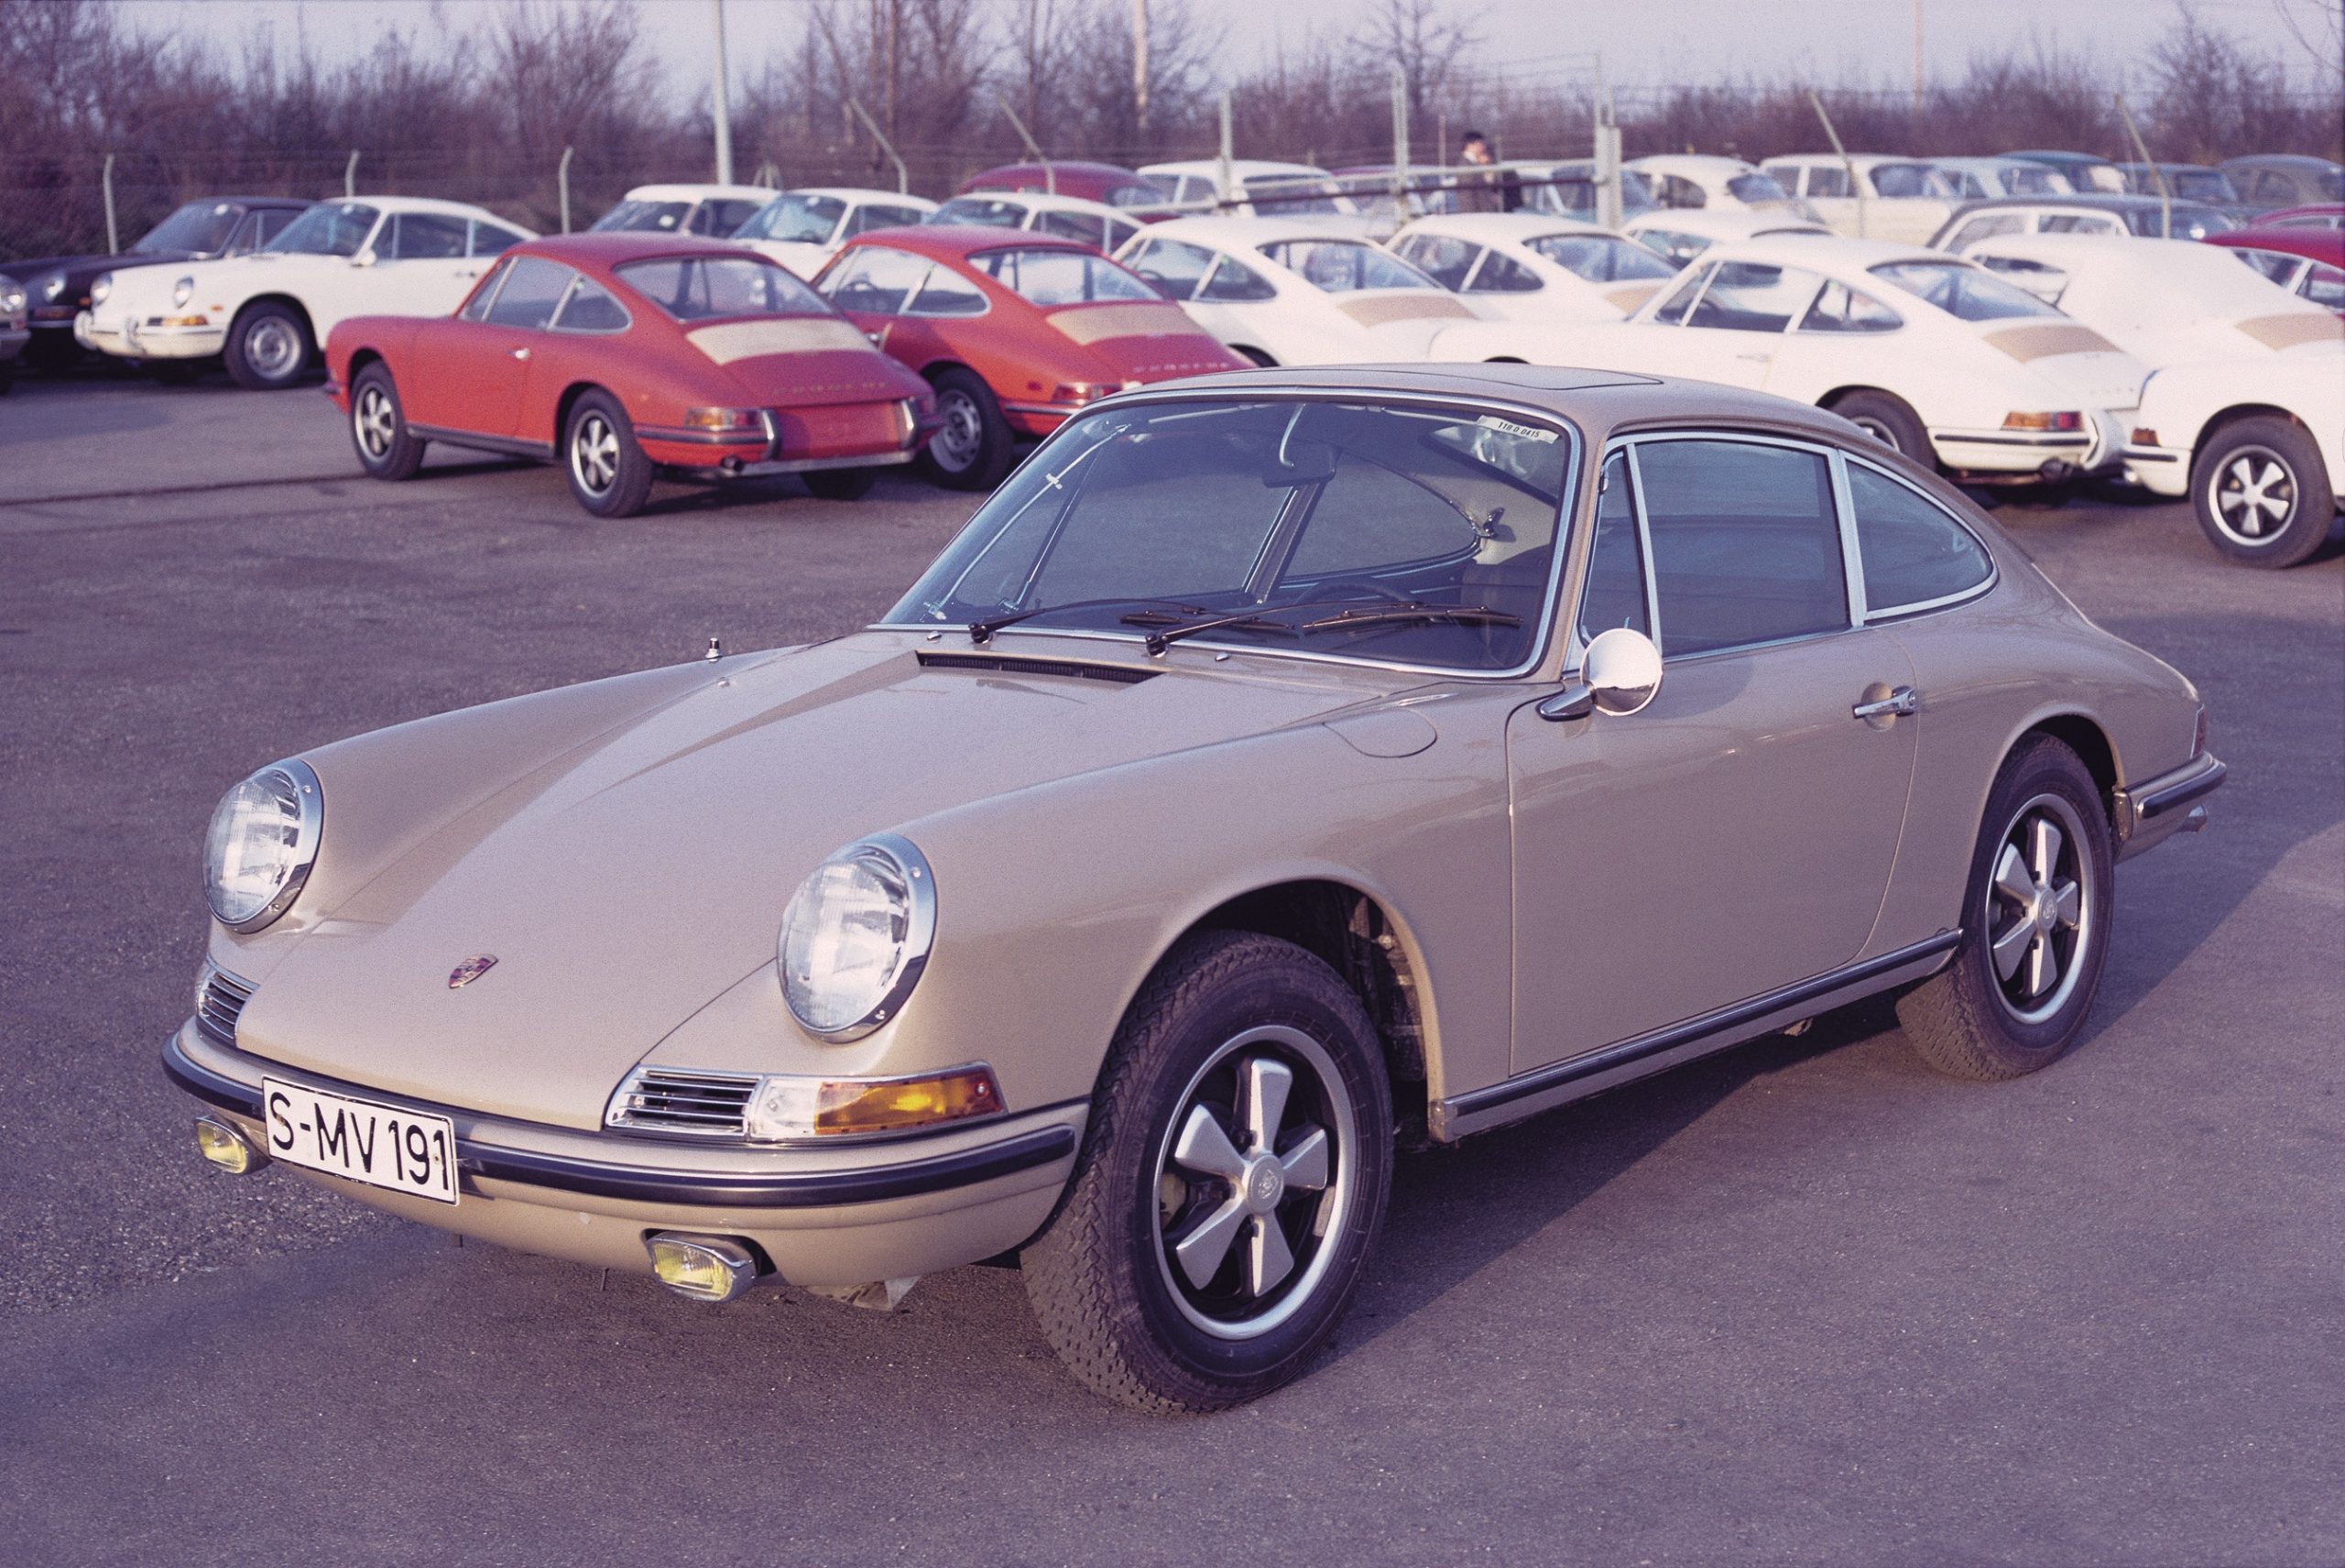 Porsche 911 F-Series (1st Generation 911) - Research Hub